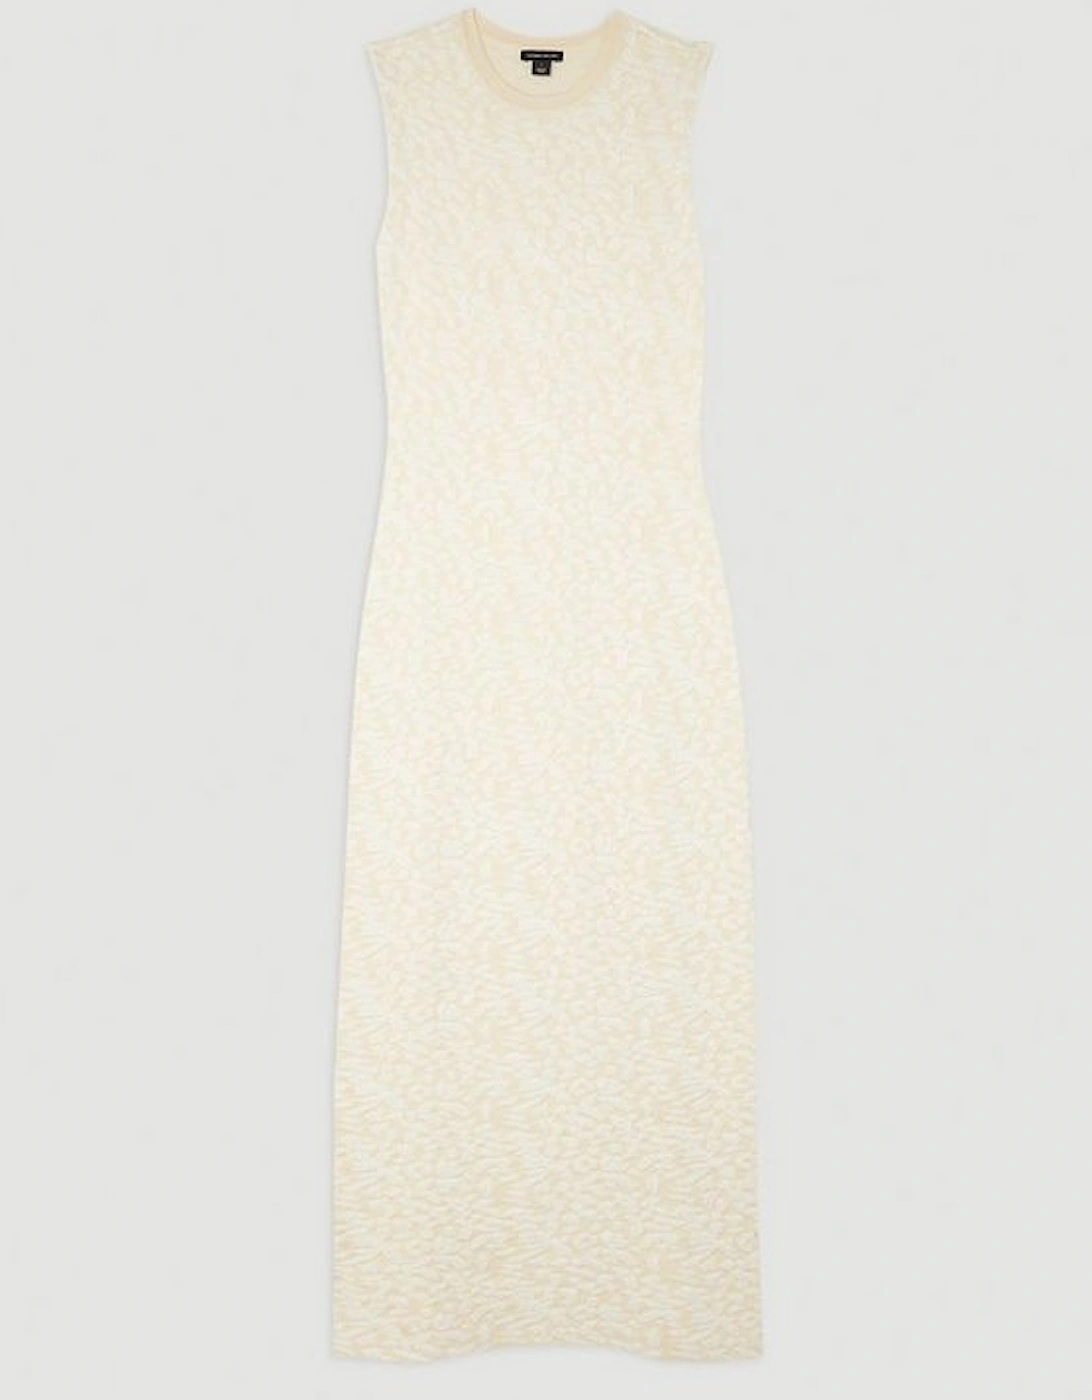 Textured Blister Stitch Knit Sleeveless Midaxi Dress